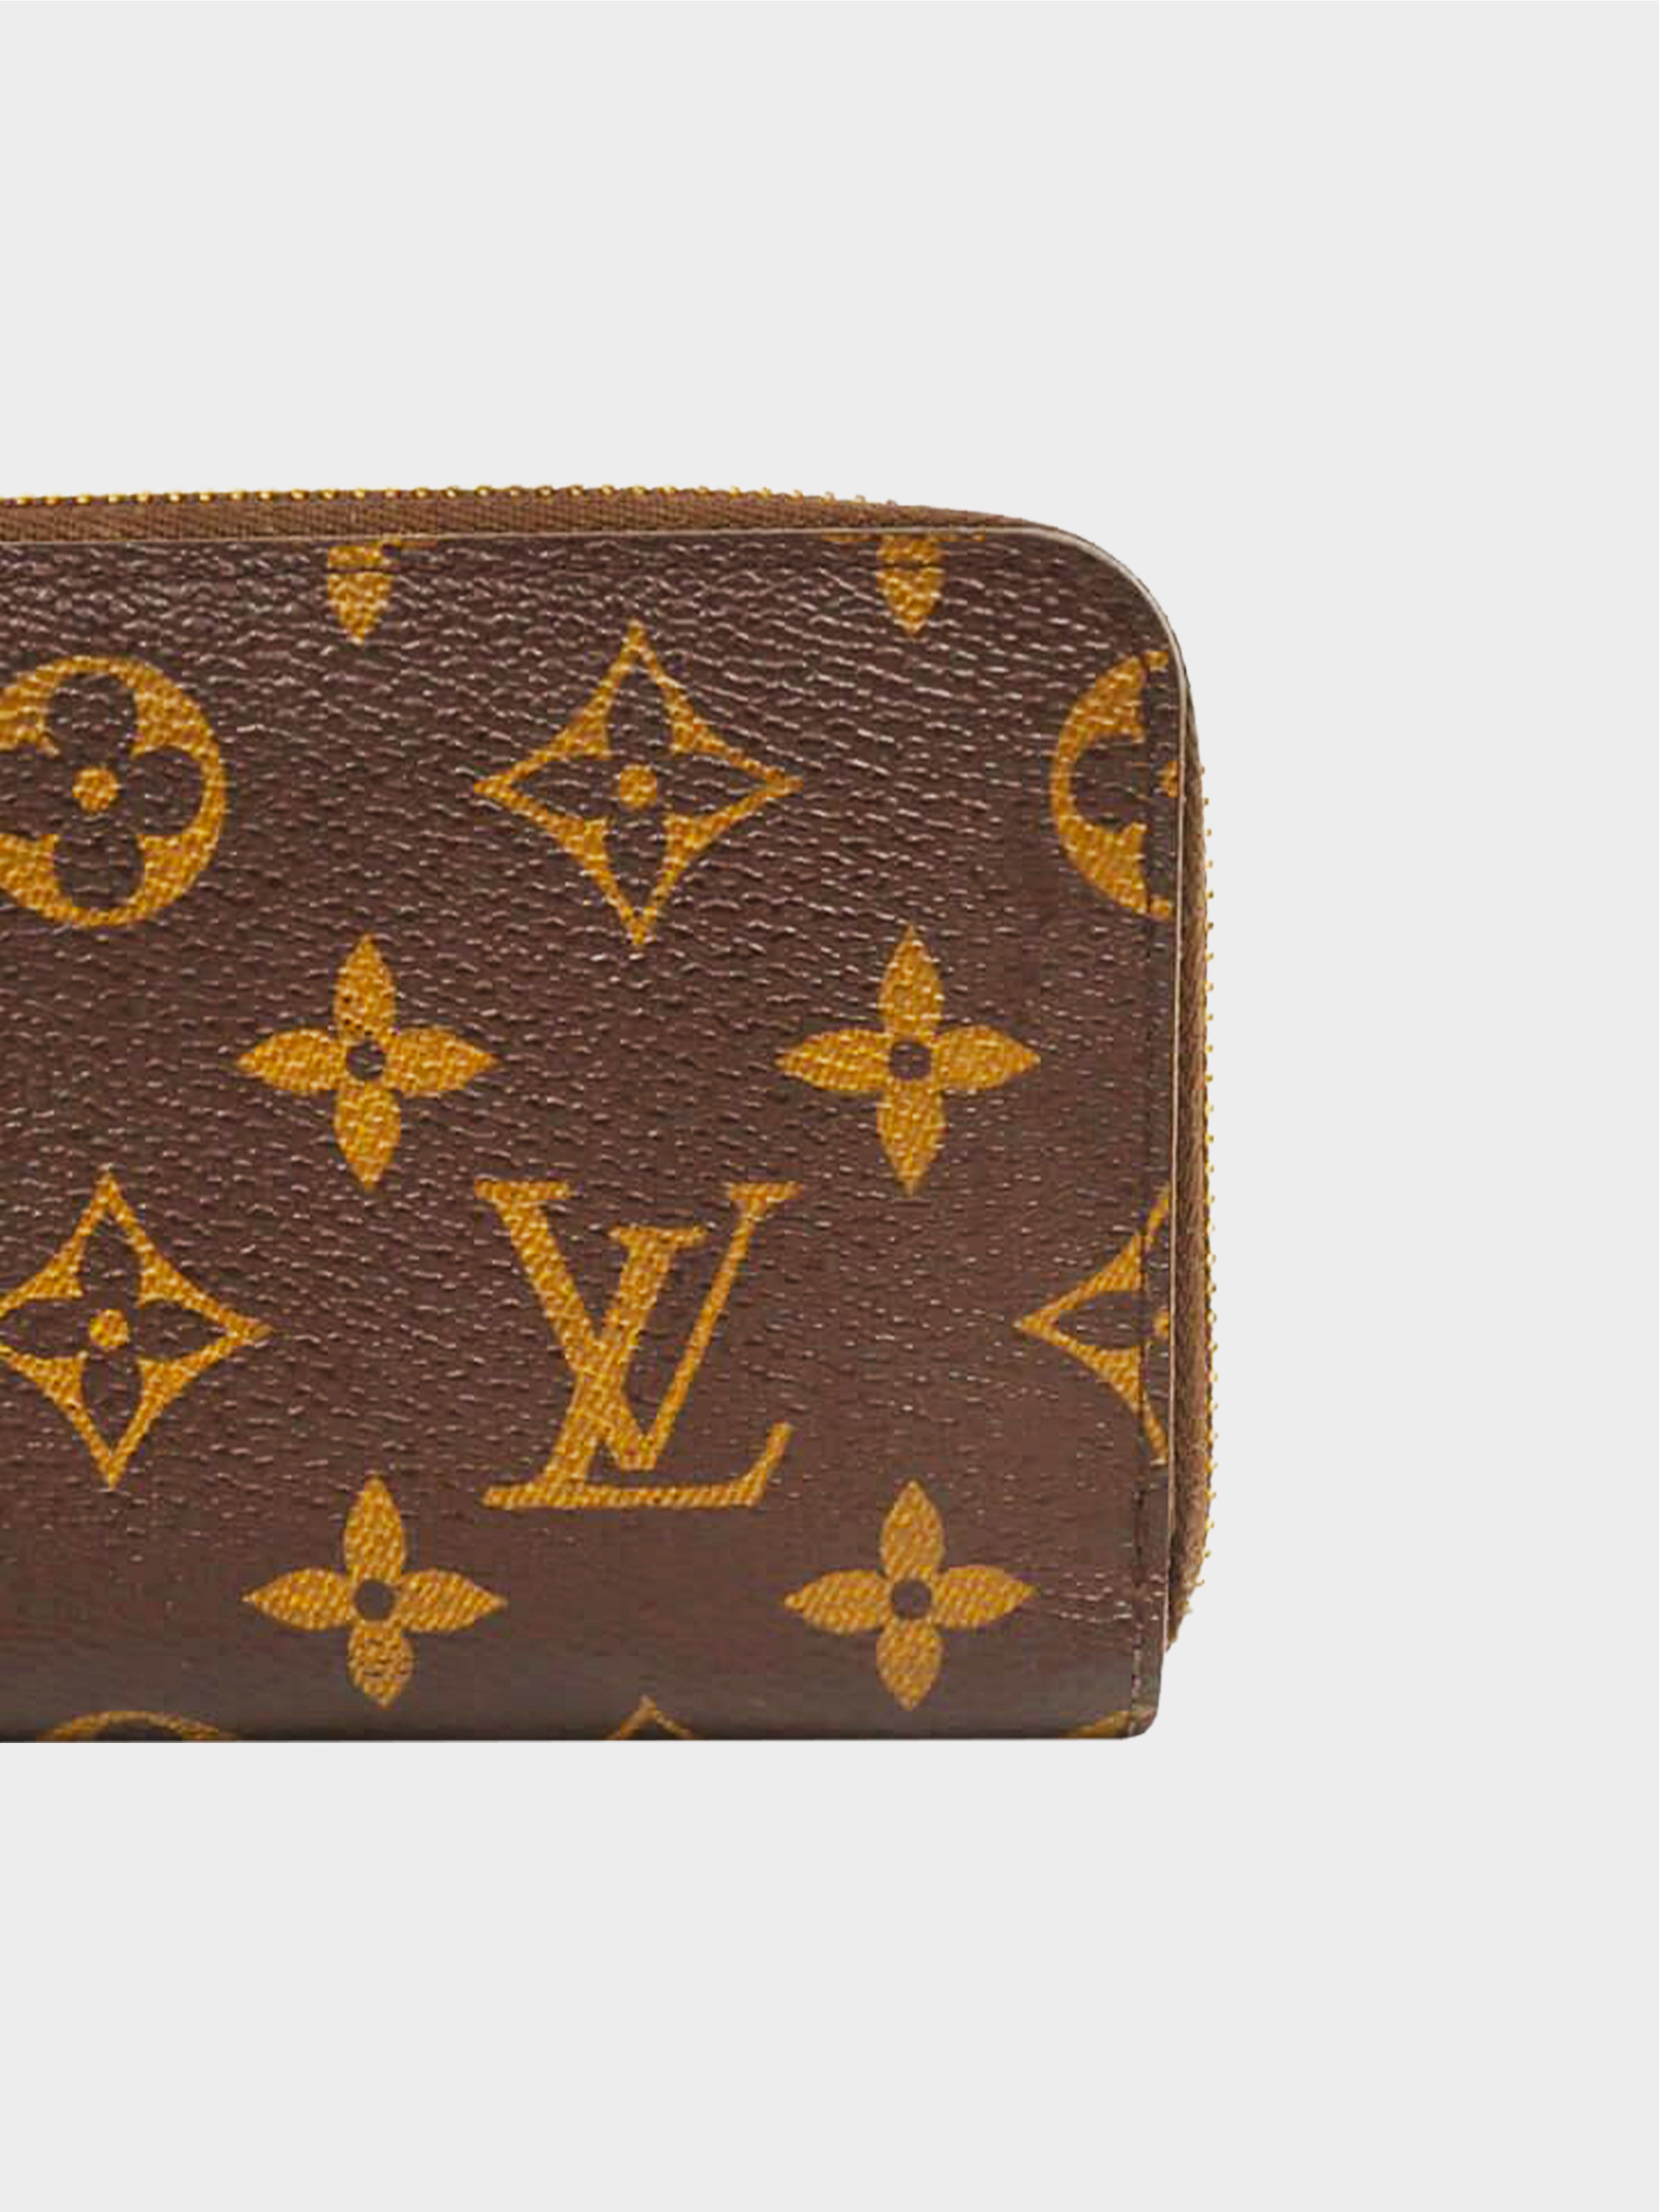 Louis Vuitton 1990s Monogram Coin Purse Wallet